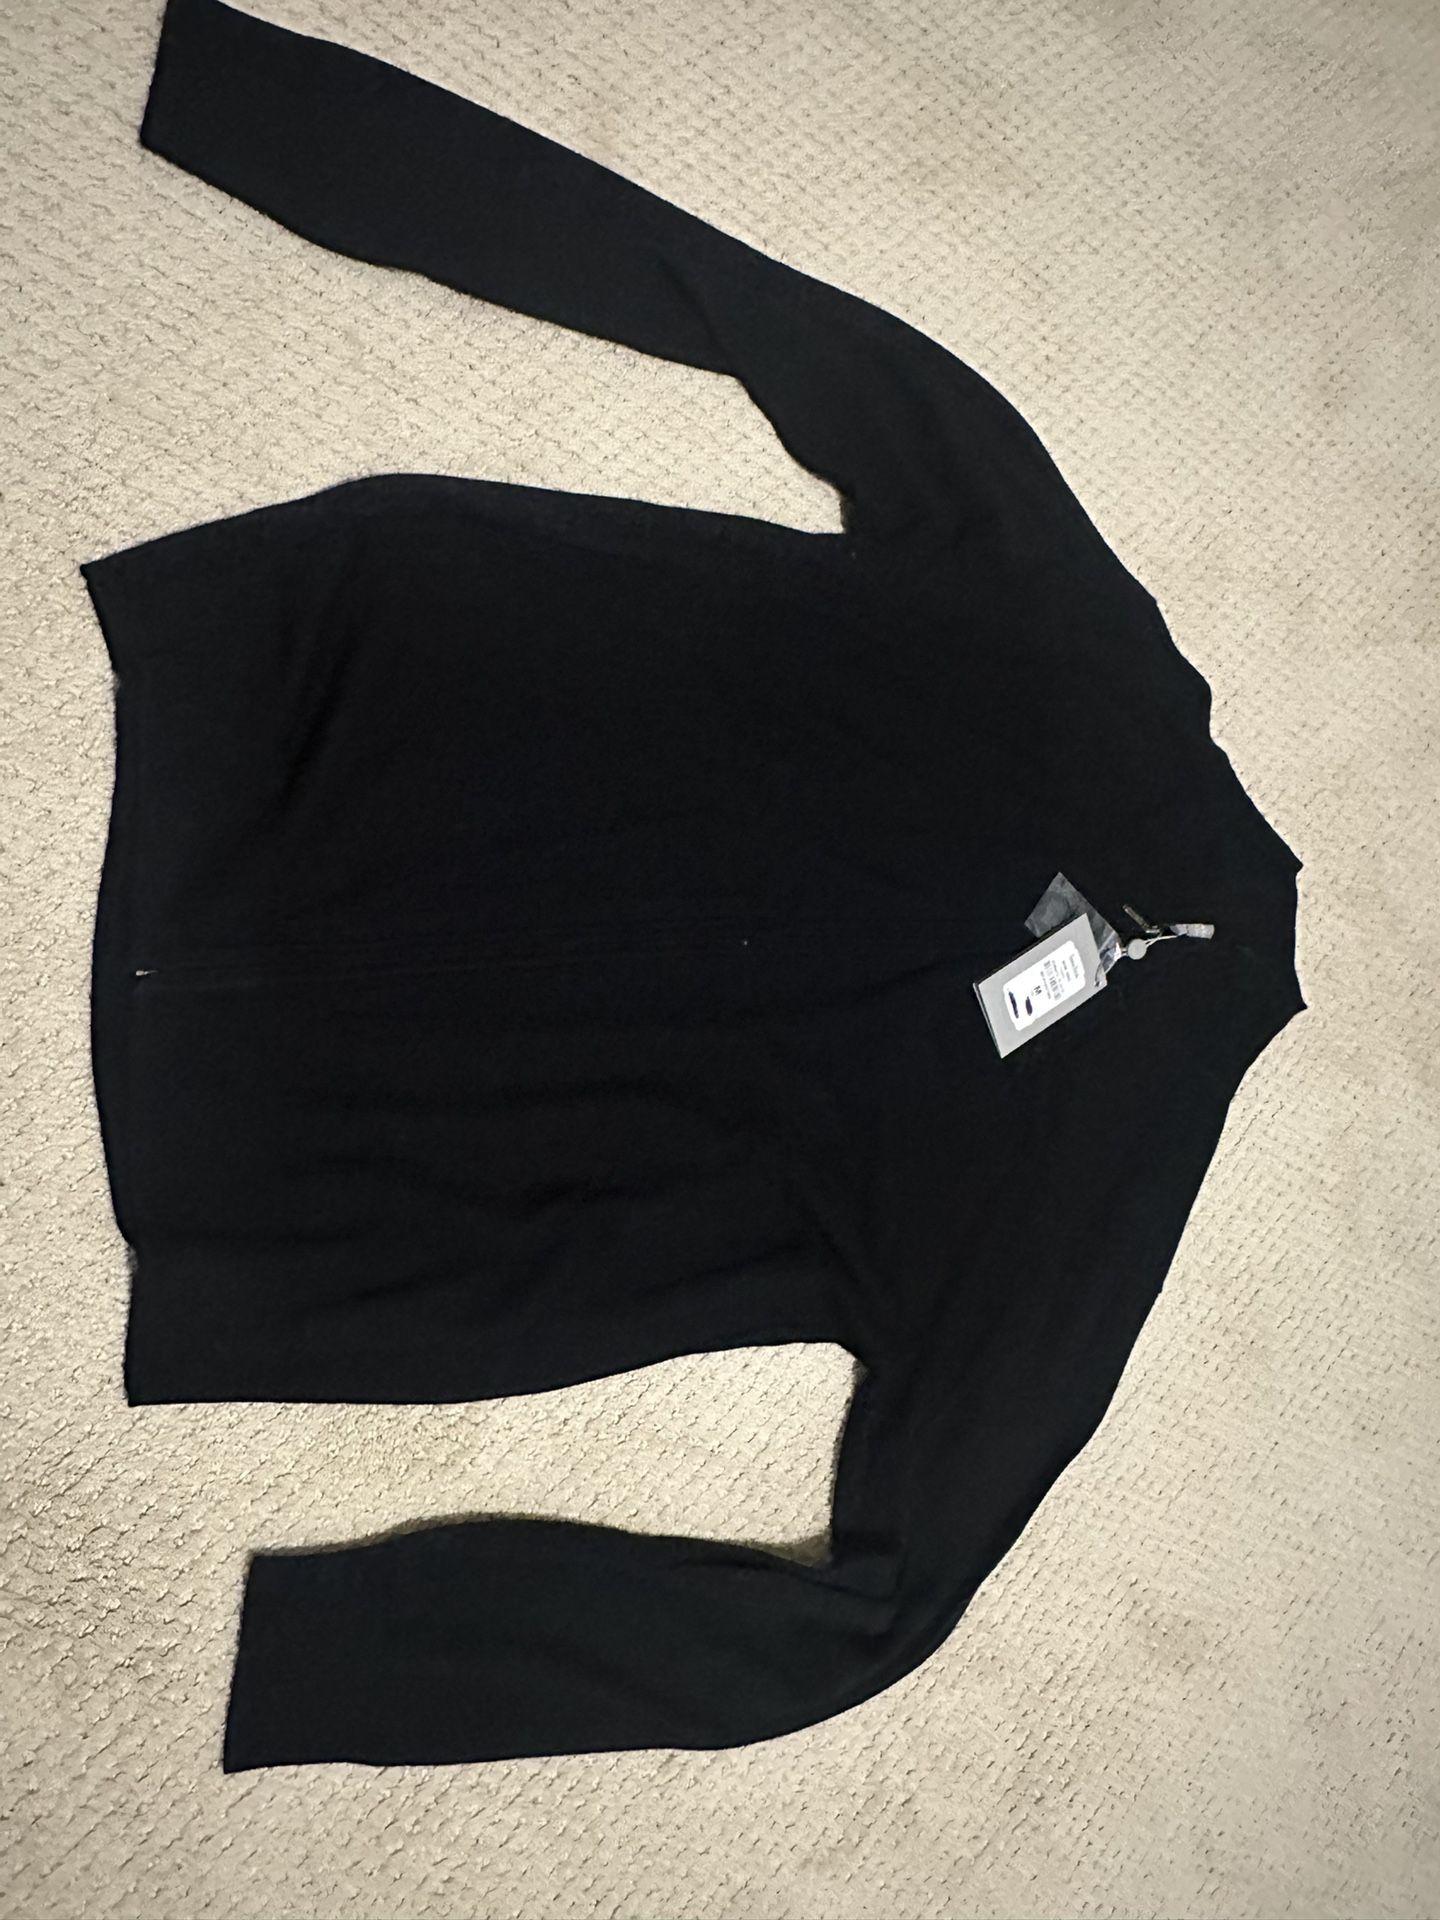 Neiman Marcus Sweater